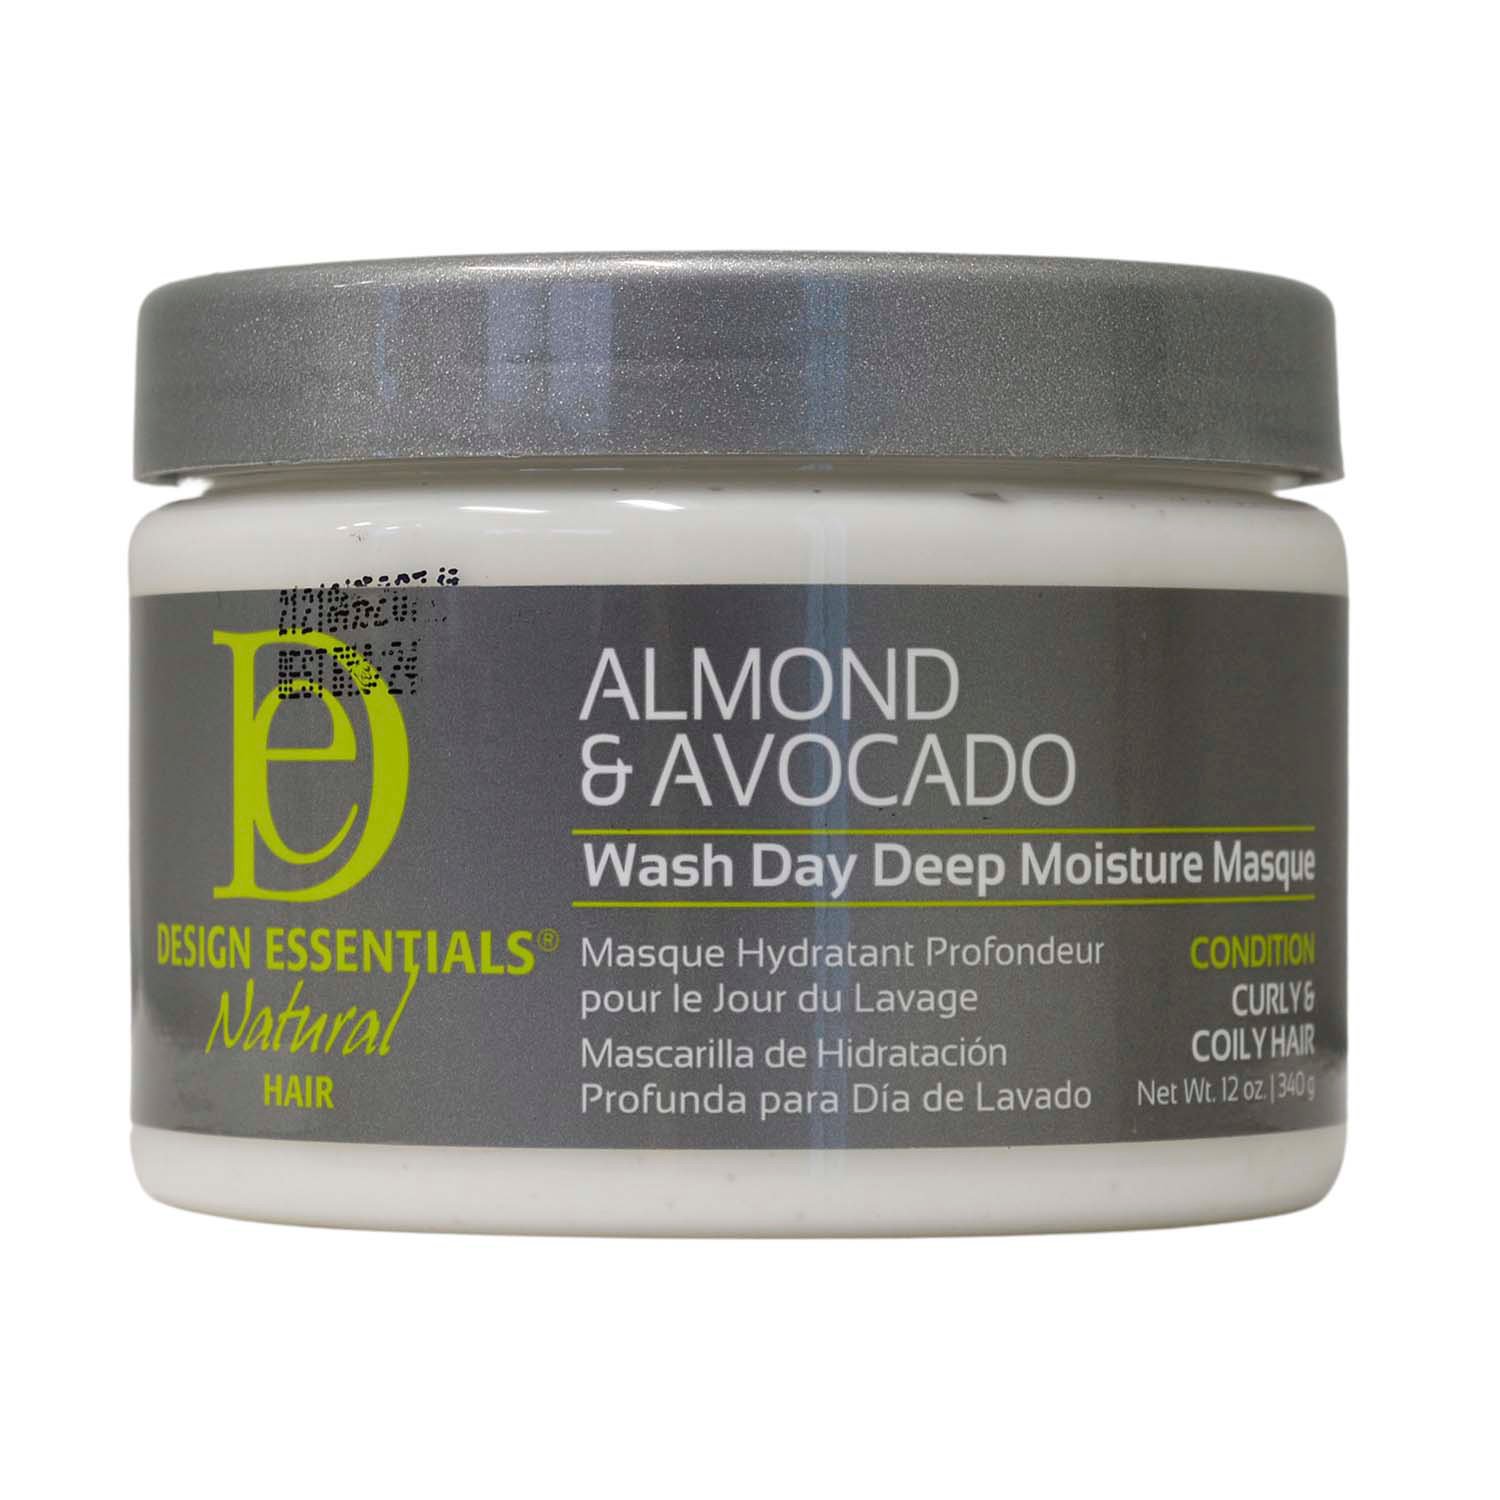 Design Essentials Wash Day Deep Moisture Masque, Almond & Avocado - 12 oz